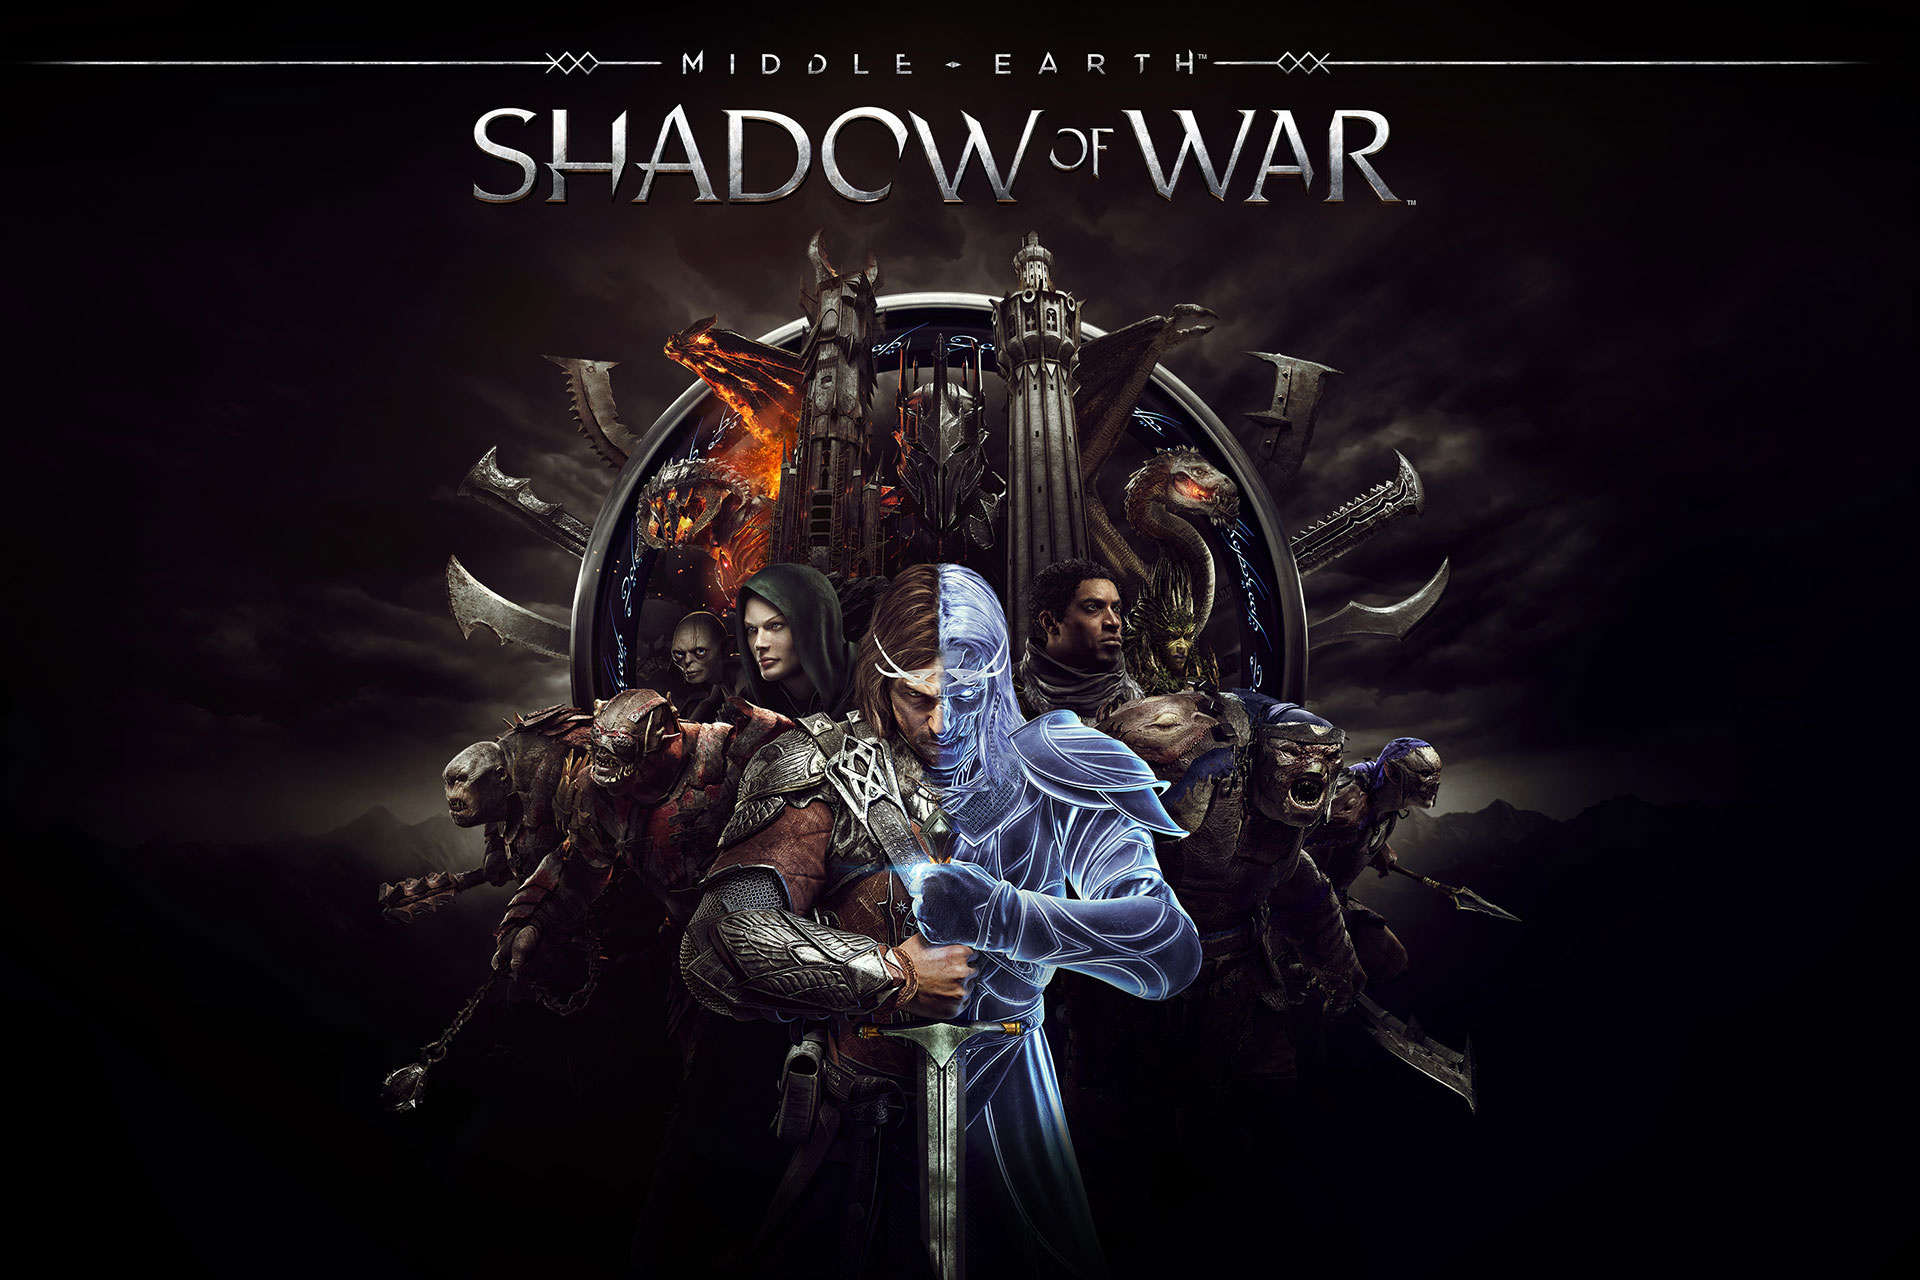 بررسی راندمان نسخه پی سی بازی Middle-earth: Shadow of War